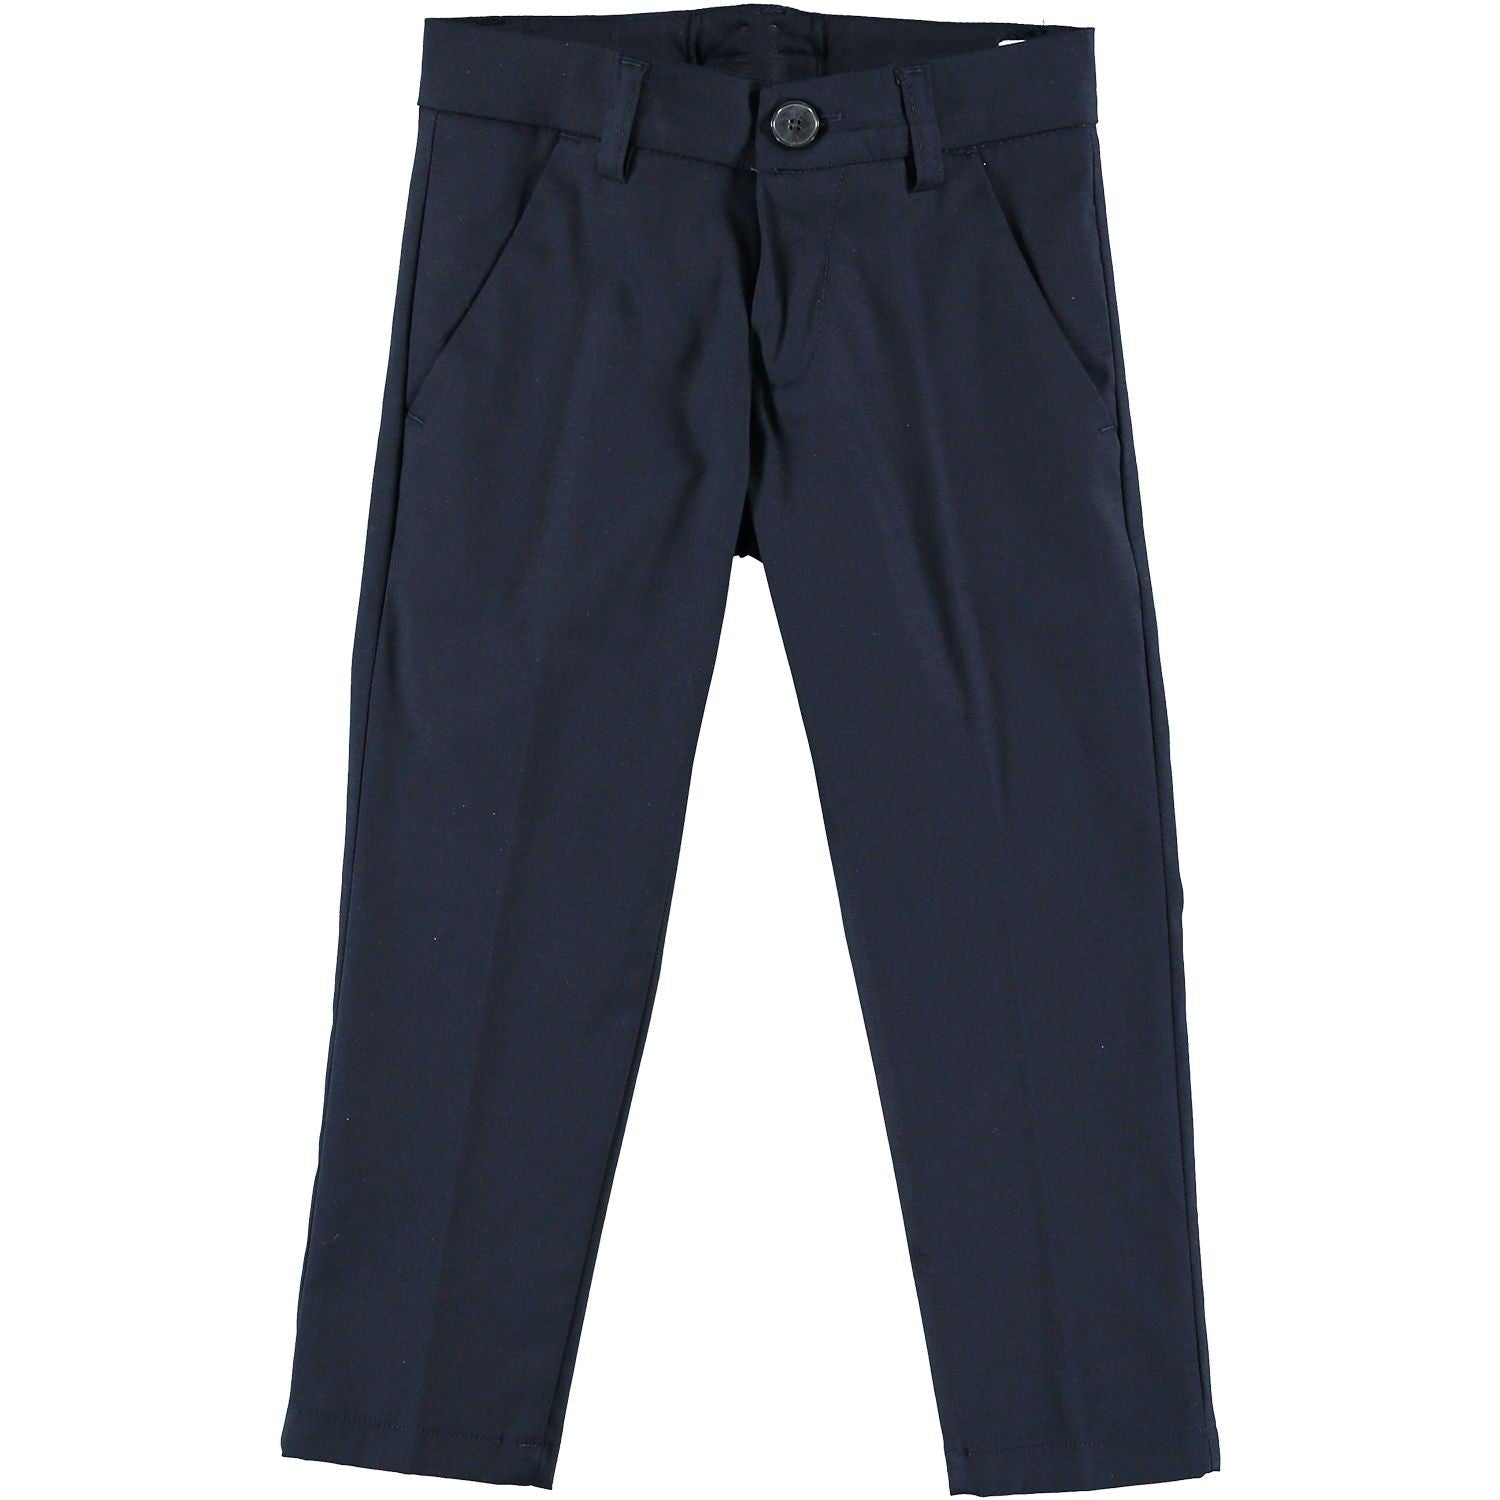 Pantalone Elegante Lungo In Cotone Blu Notte Con Tasche A Filo Neonato MANUELL&FRANK MF1050N - MANUELL&FRANK - LuxuryKids